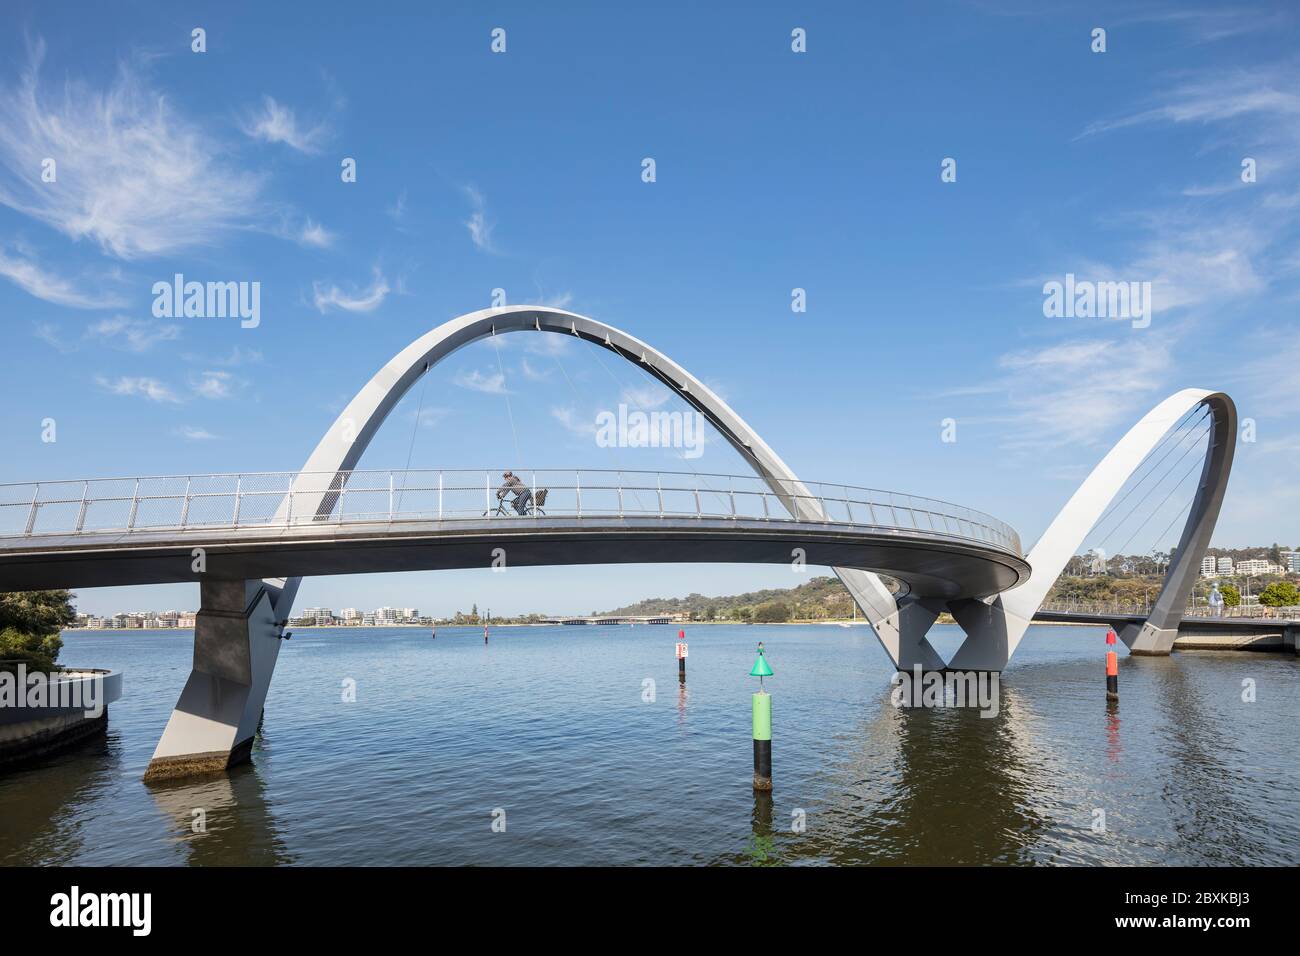 Perth Australia November 5th 2019: The iconic curved pedestrian bridge at Elizabeth Quay in Perth, Western Australia Stock Photo